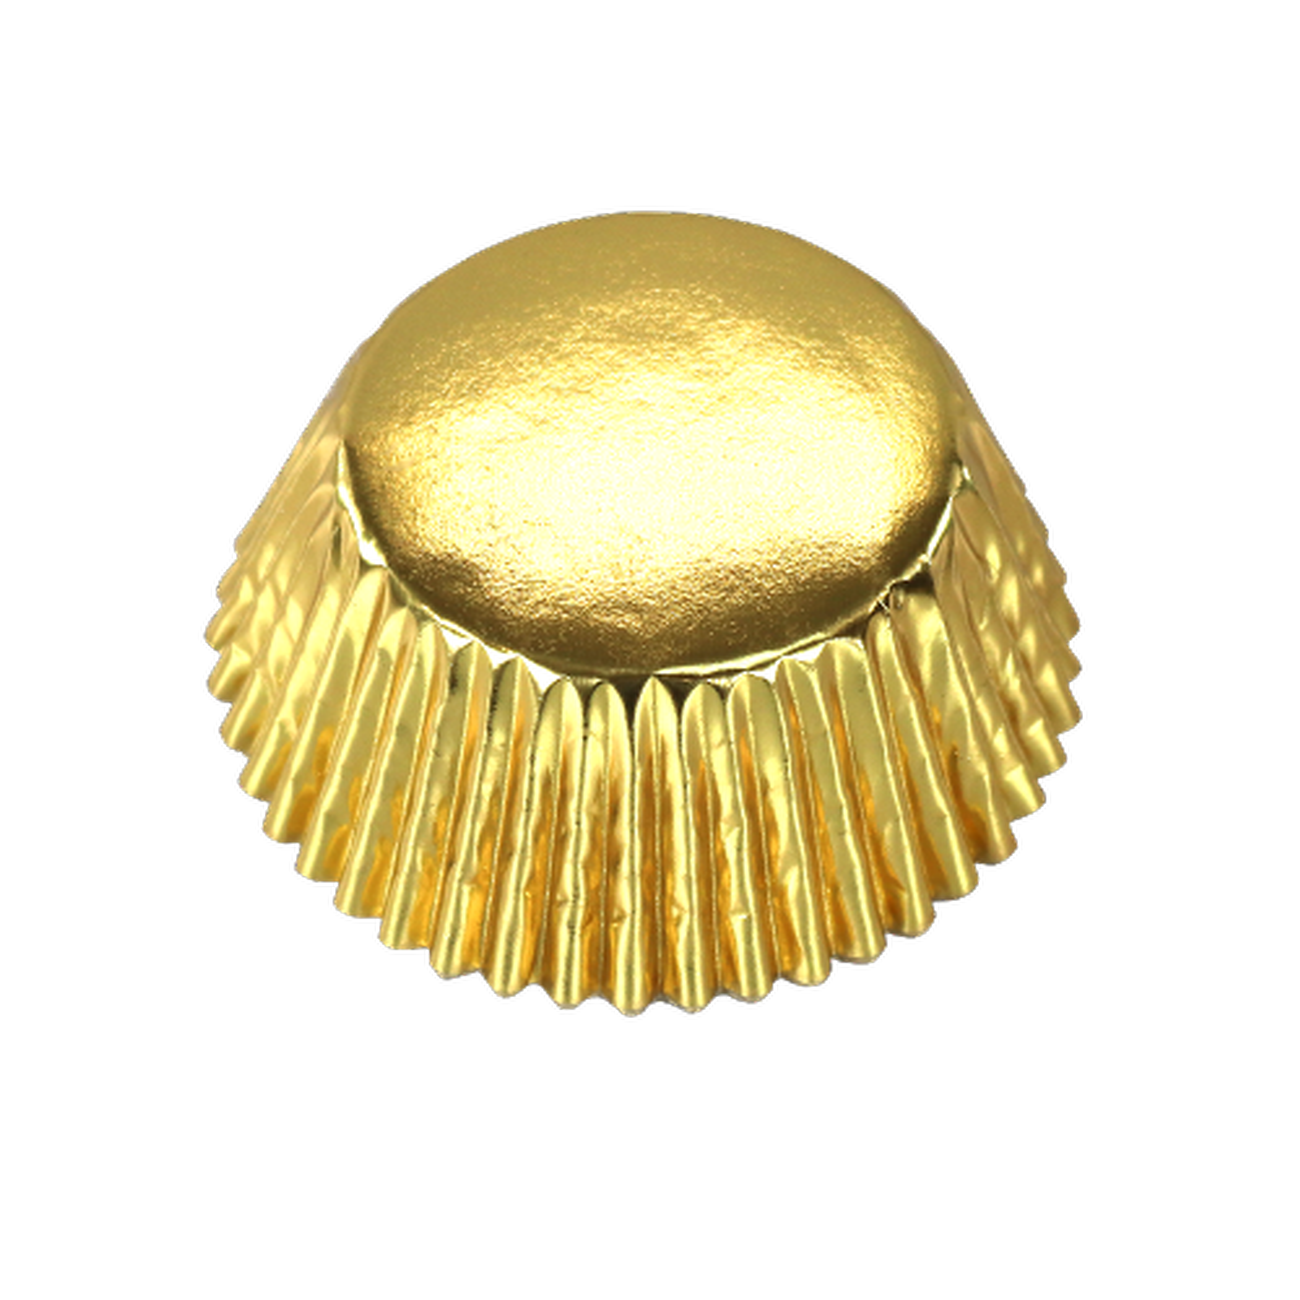 pme-30-gold-metallic-foil-cupcake-cases - PME 30 Metallic Gold Foil Baking Cases